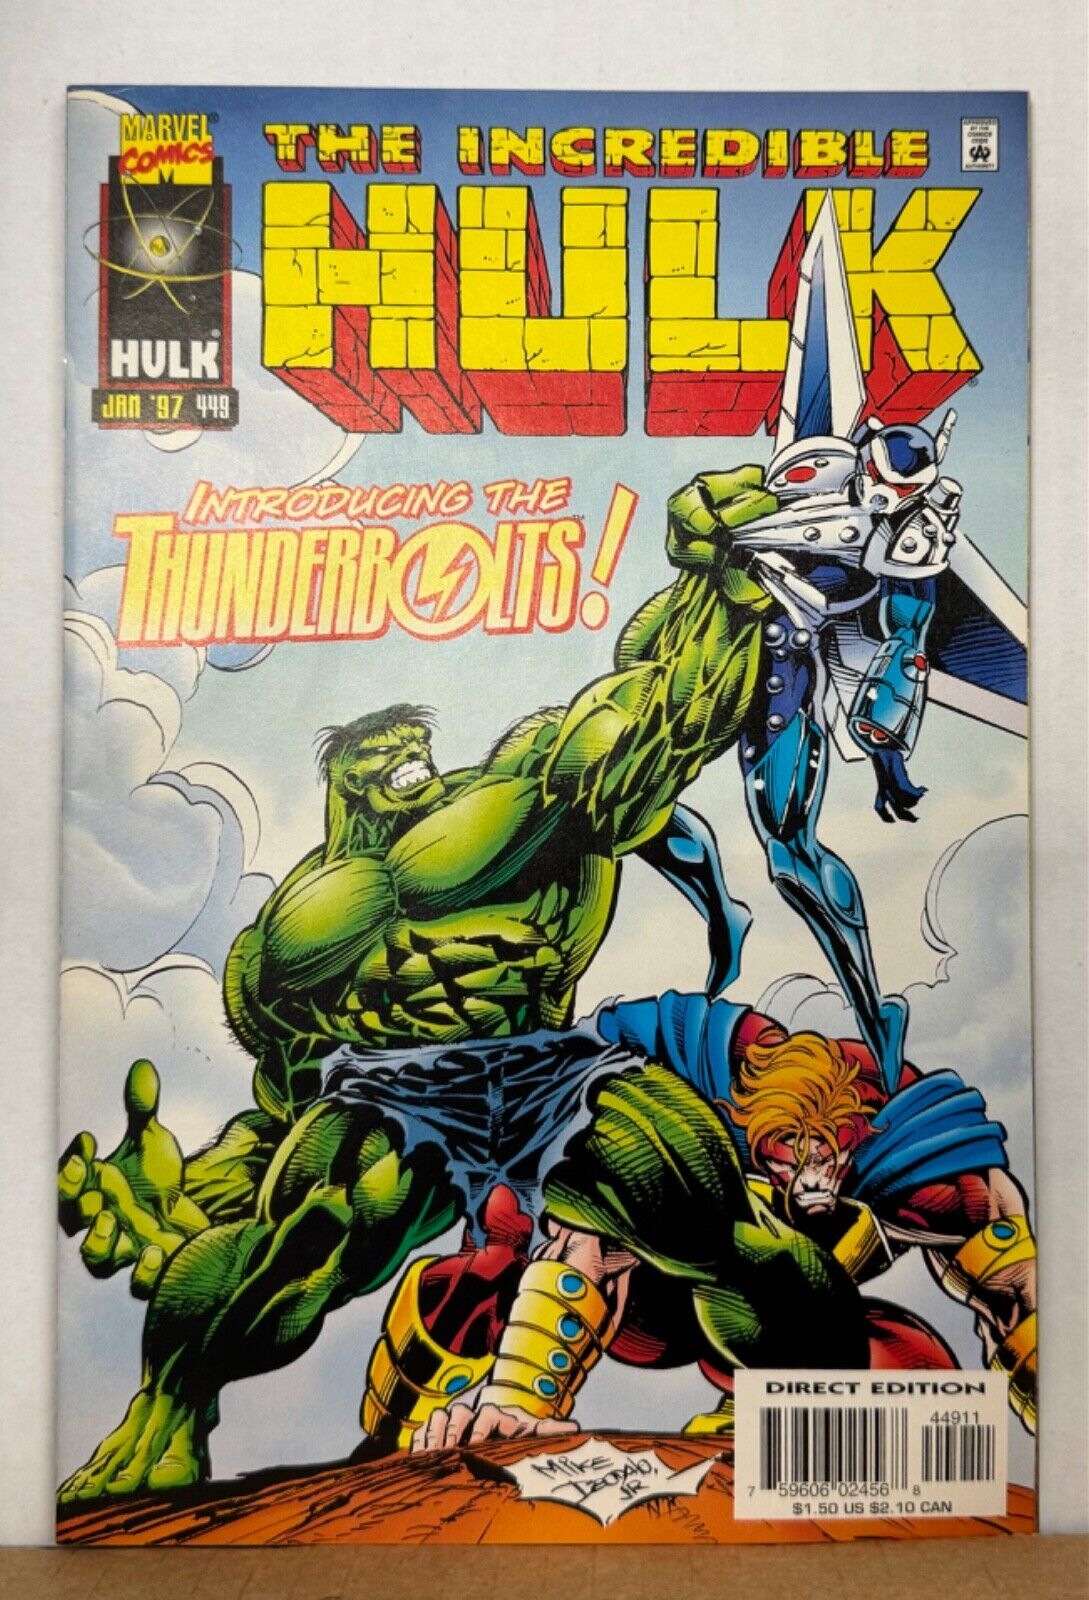 The Incredible Hulk #449 (Marvel Comics January 1997)